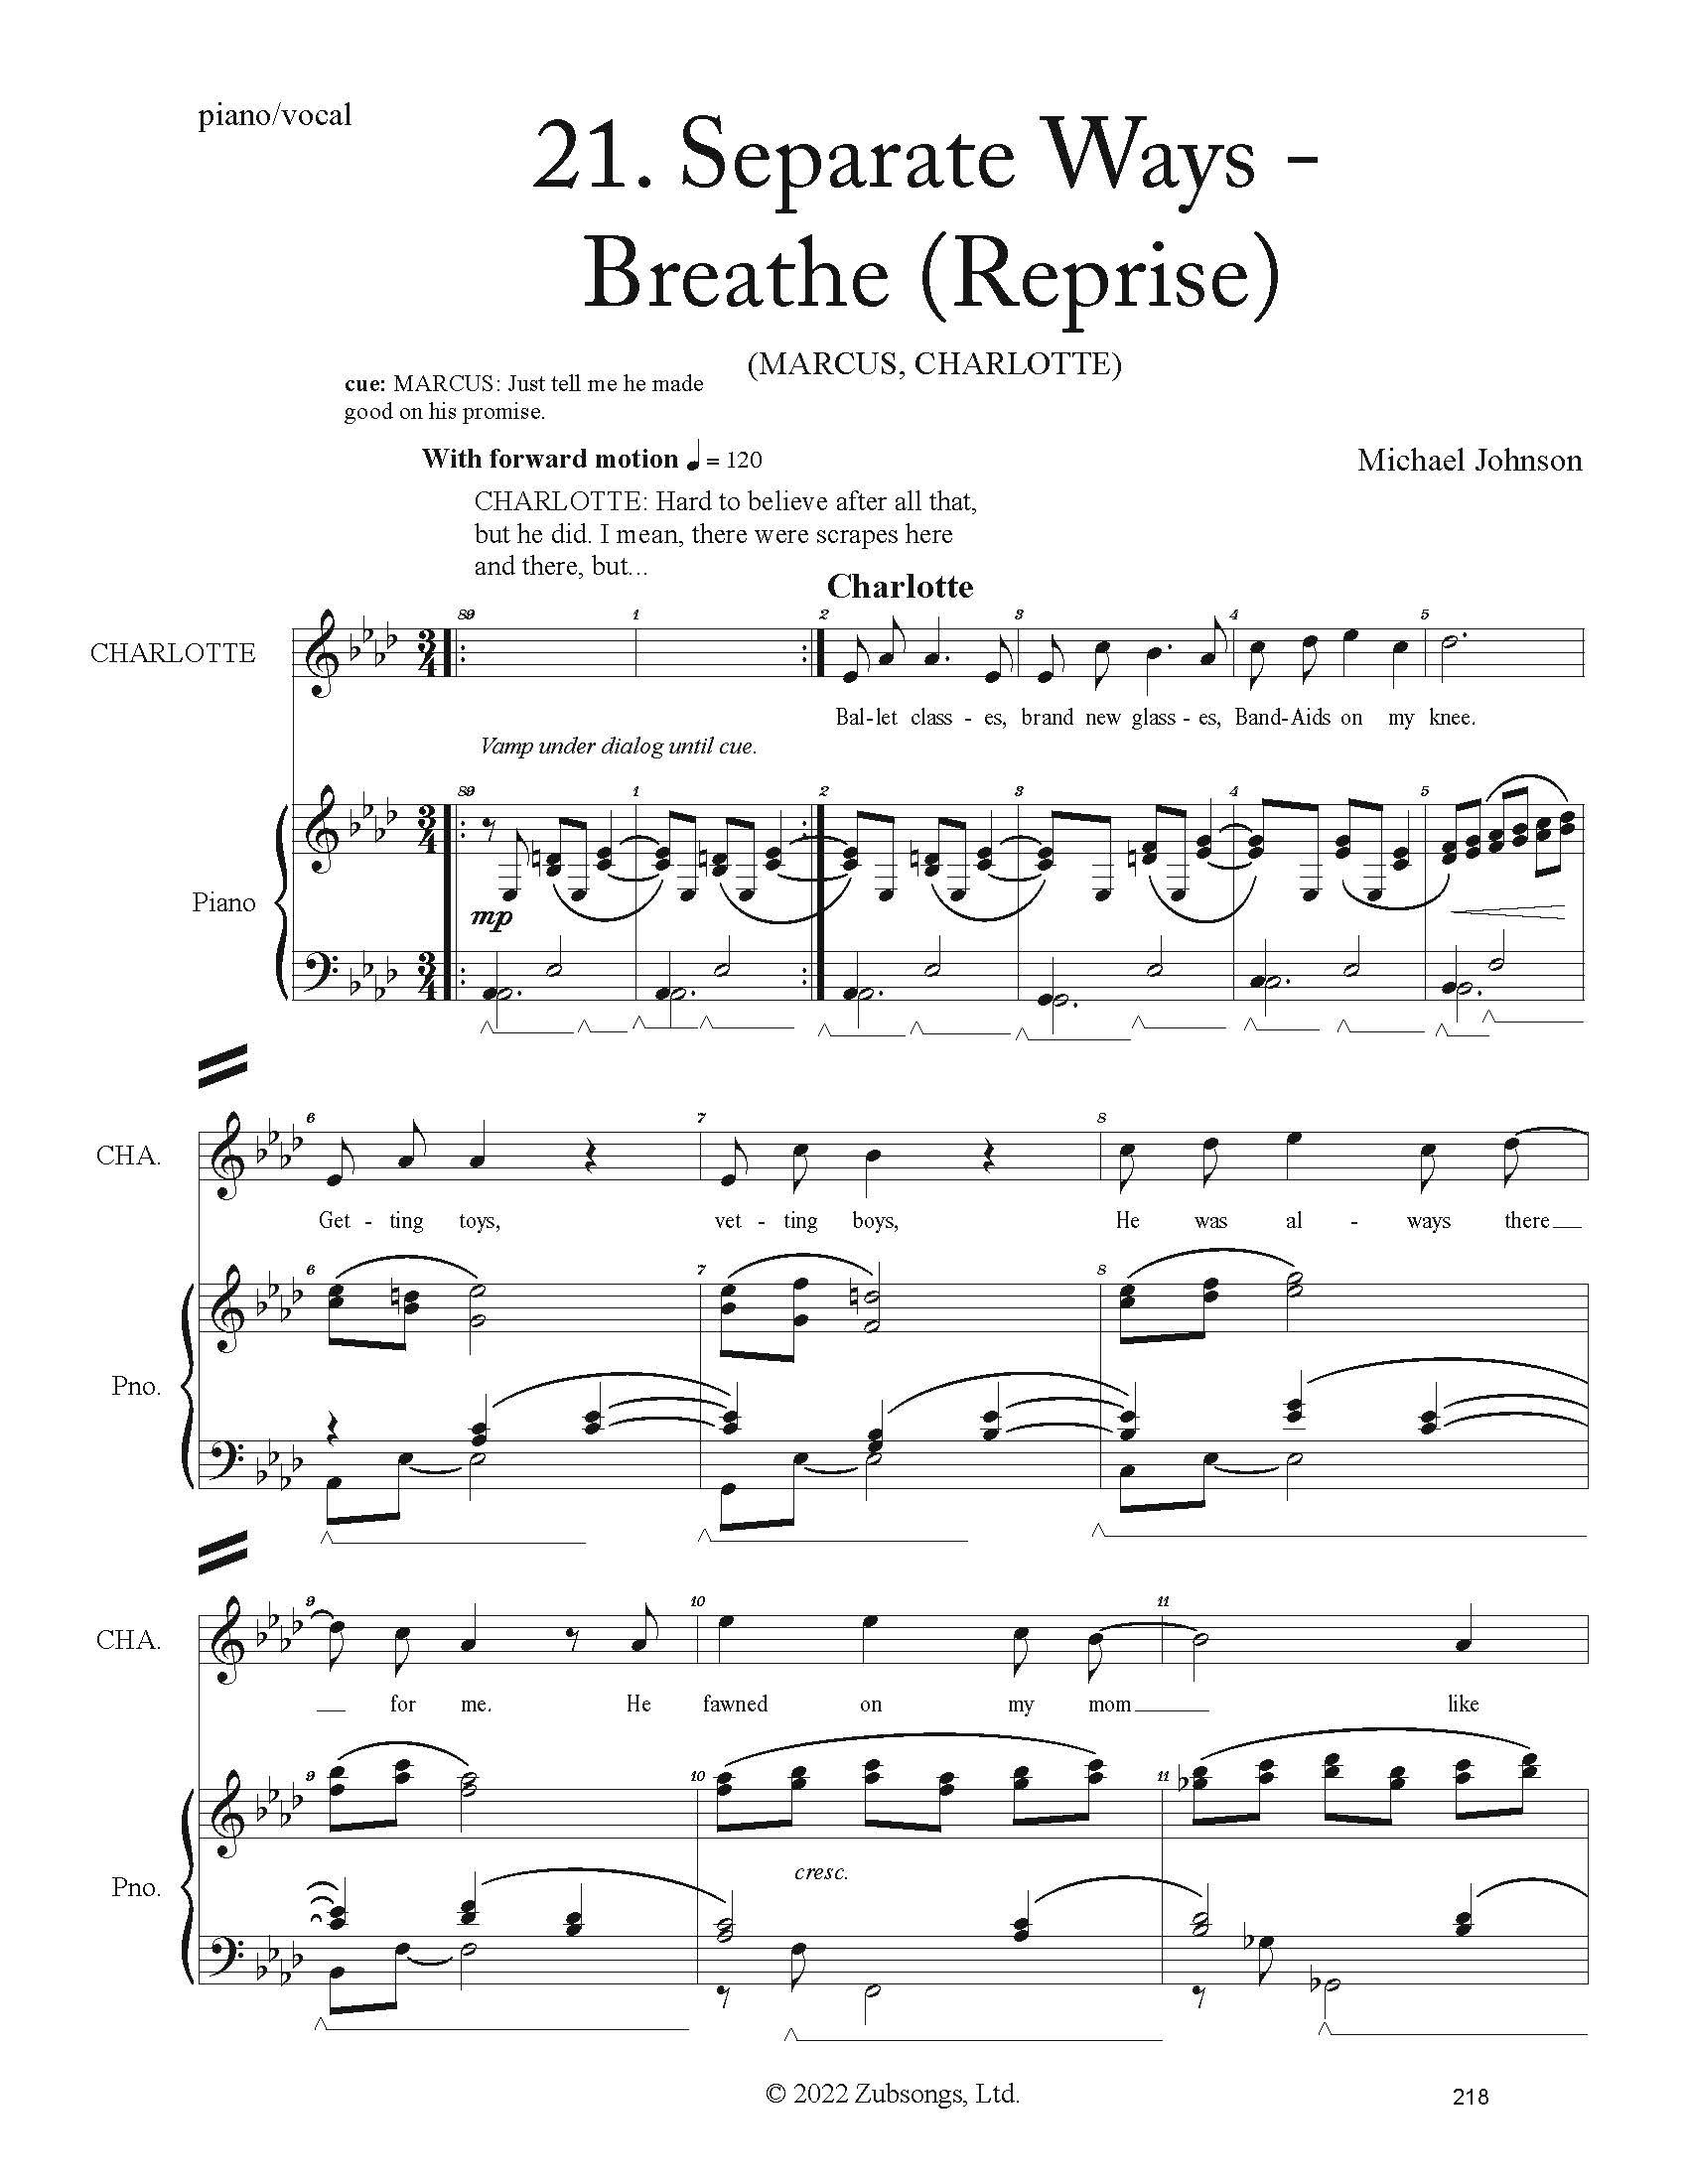 FULL PIANO VOCAL SCORE DRAFT 1 - Score_Page_218.jpg